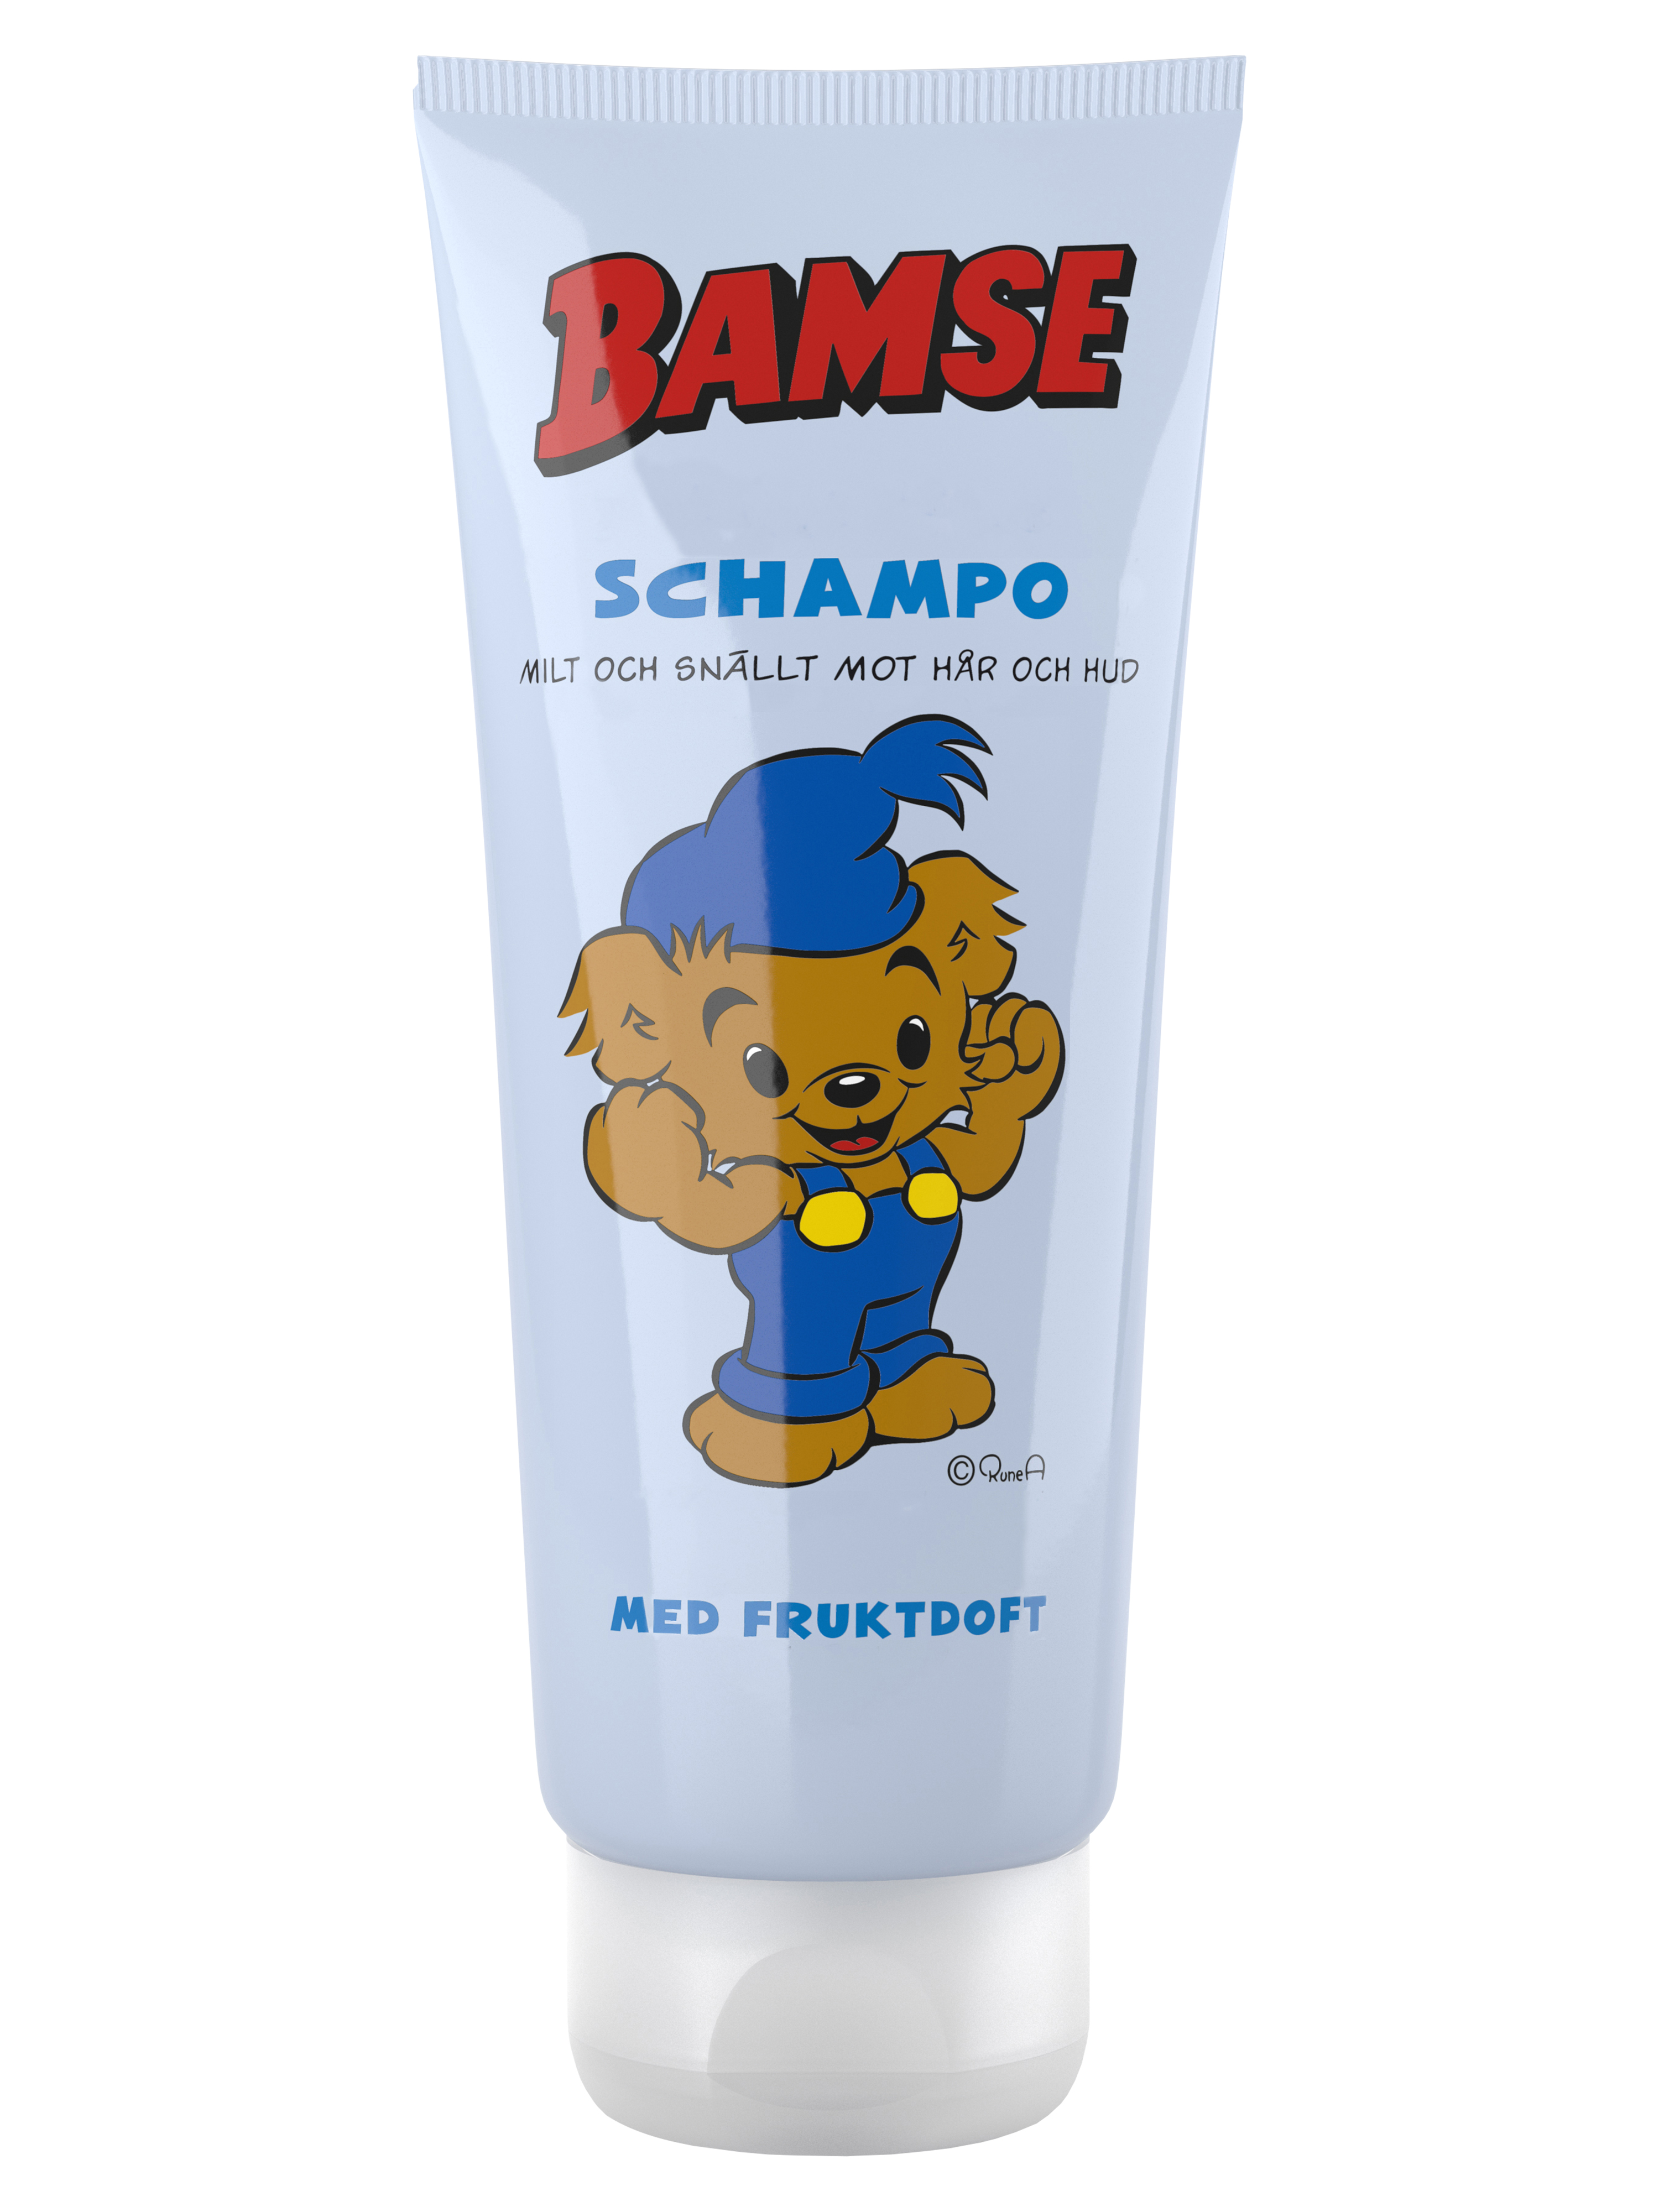 Bamse Shampoo, 200 ml